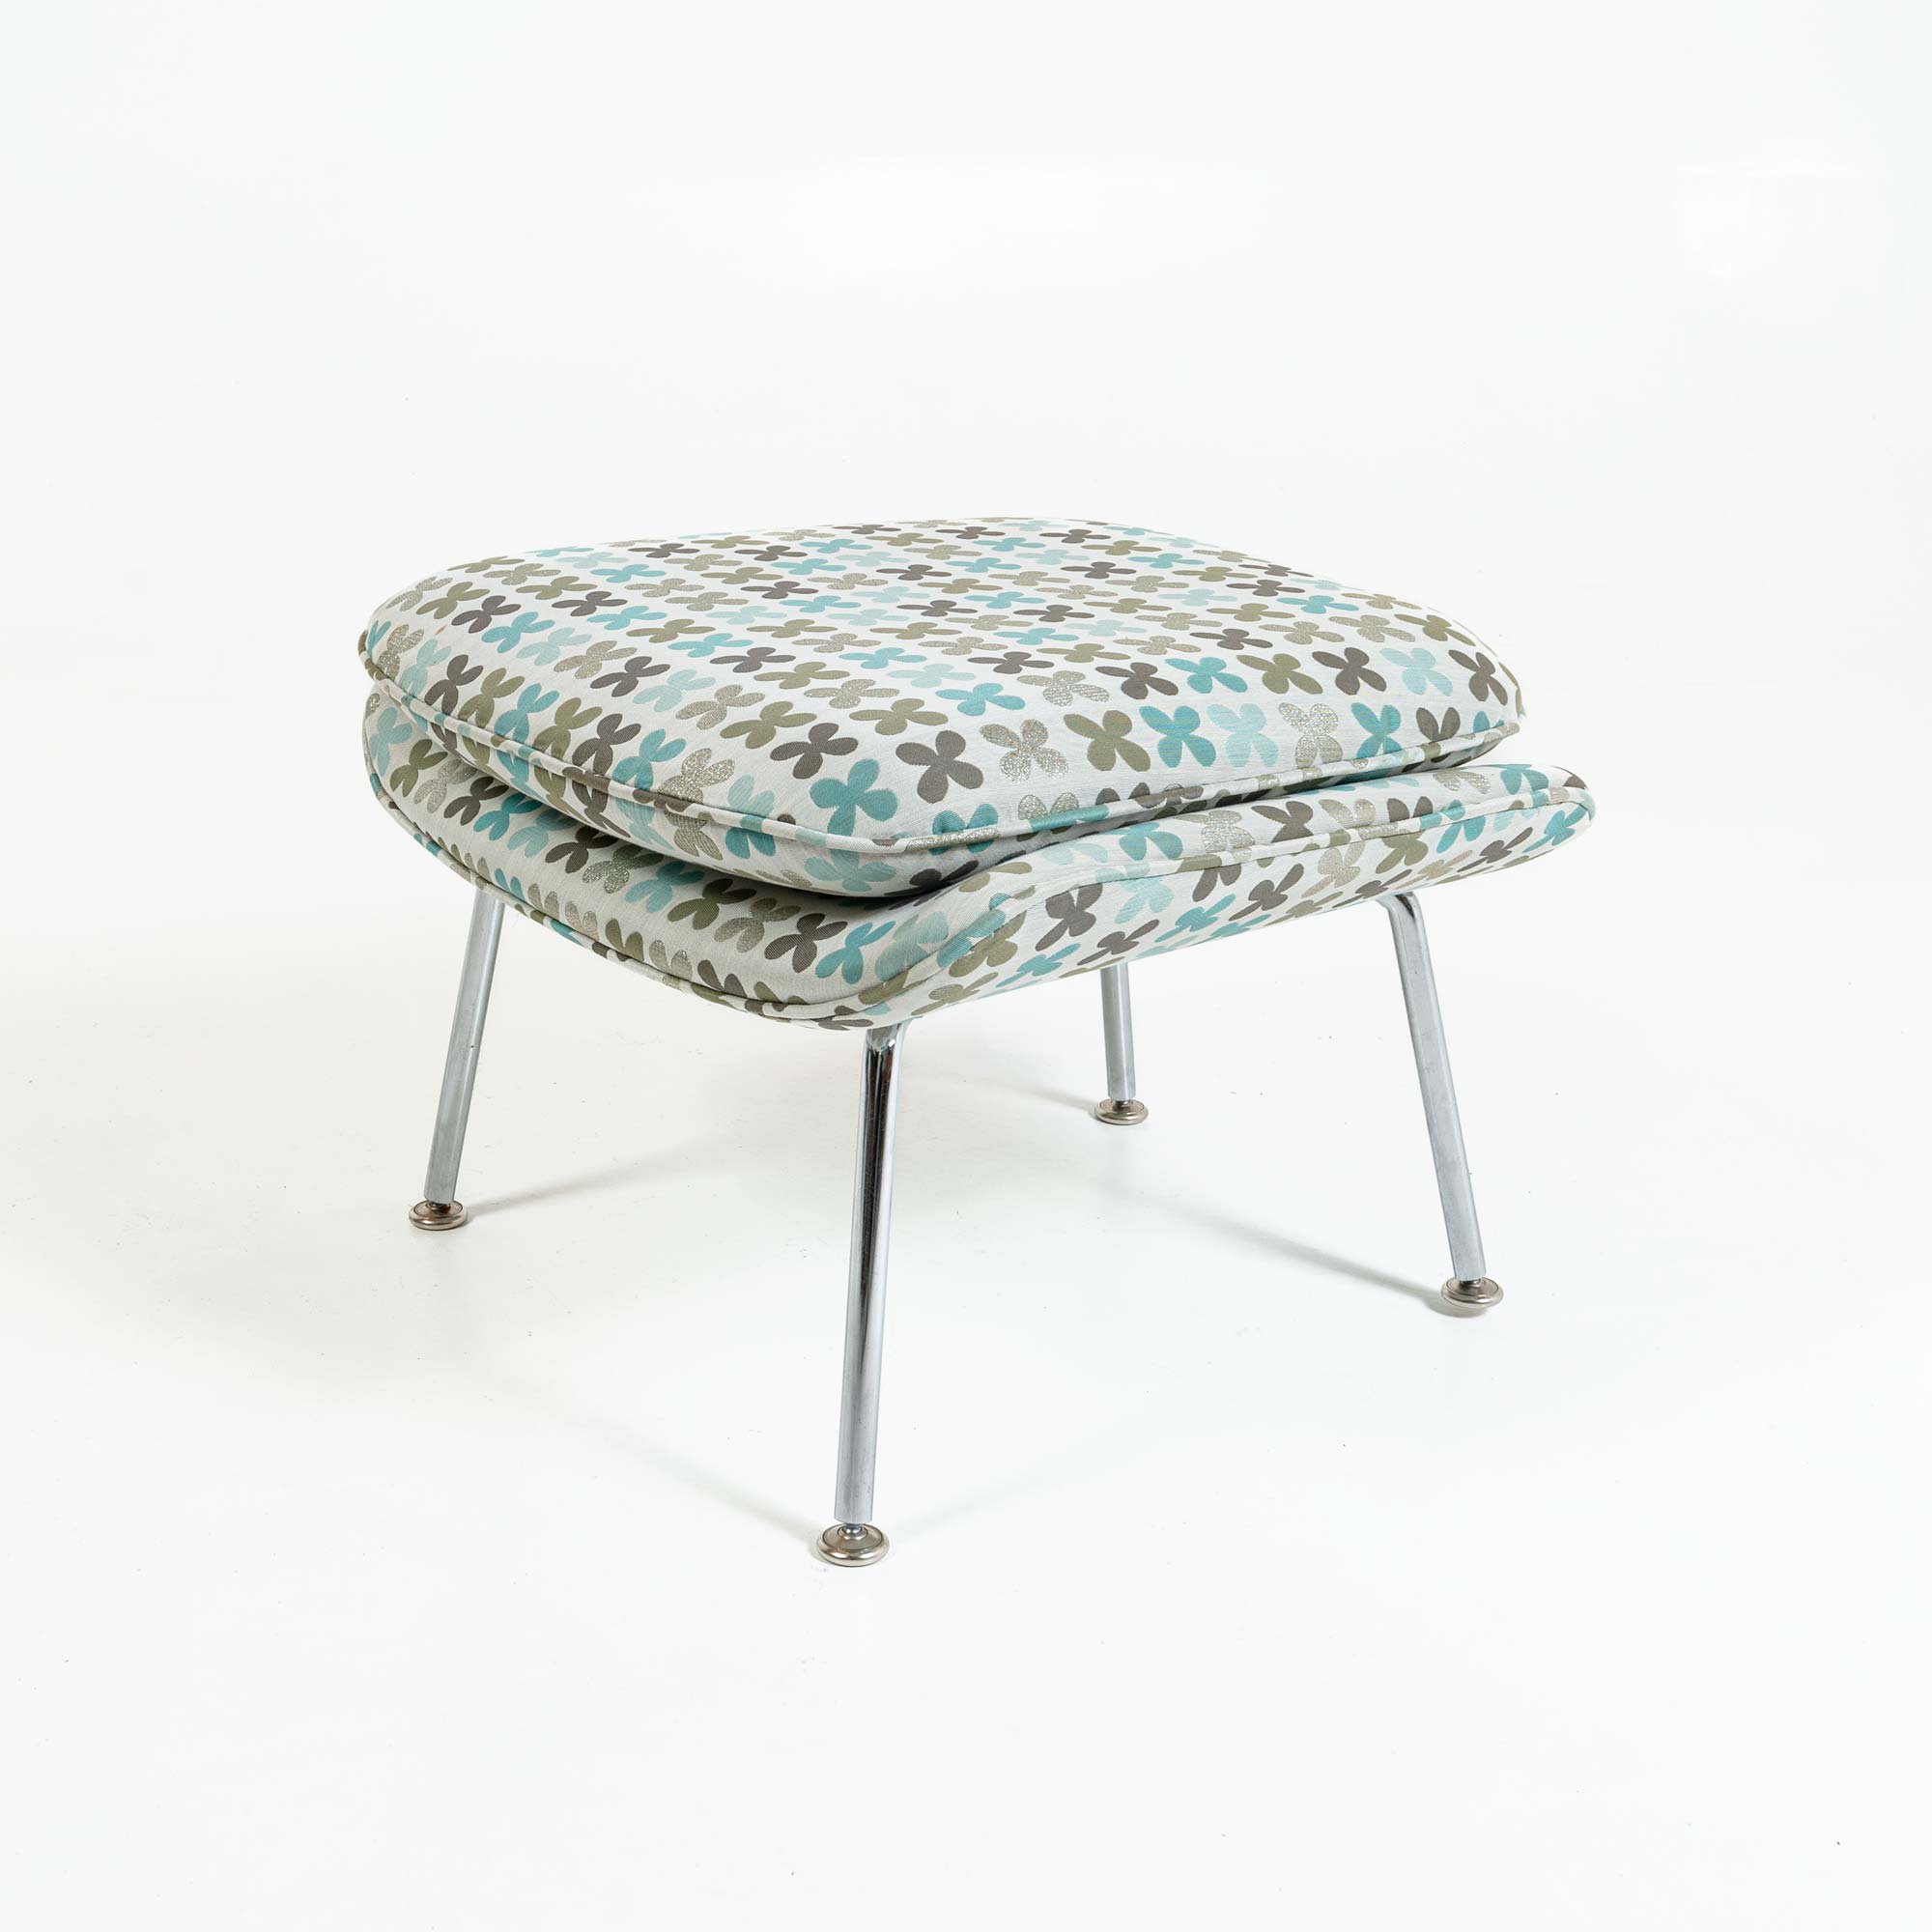 Eero Saarinen Womb Chair & Ottoman Medium in Alexander Girard Quatrefoil Fabric